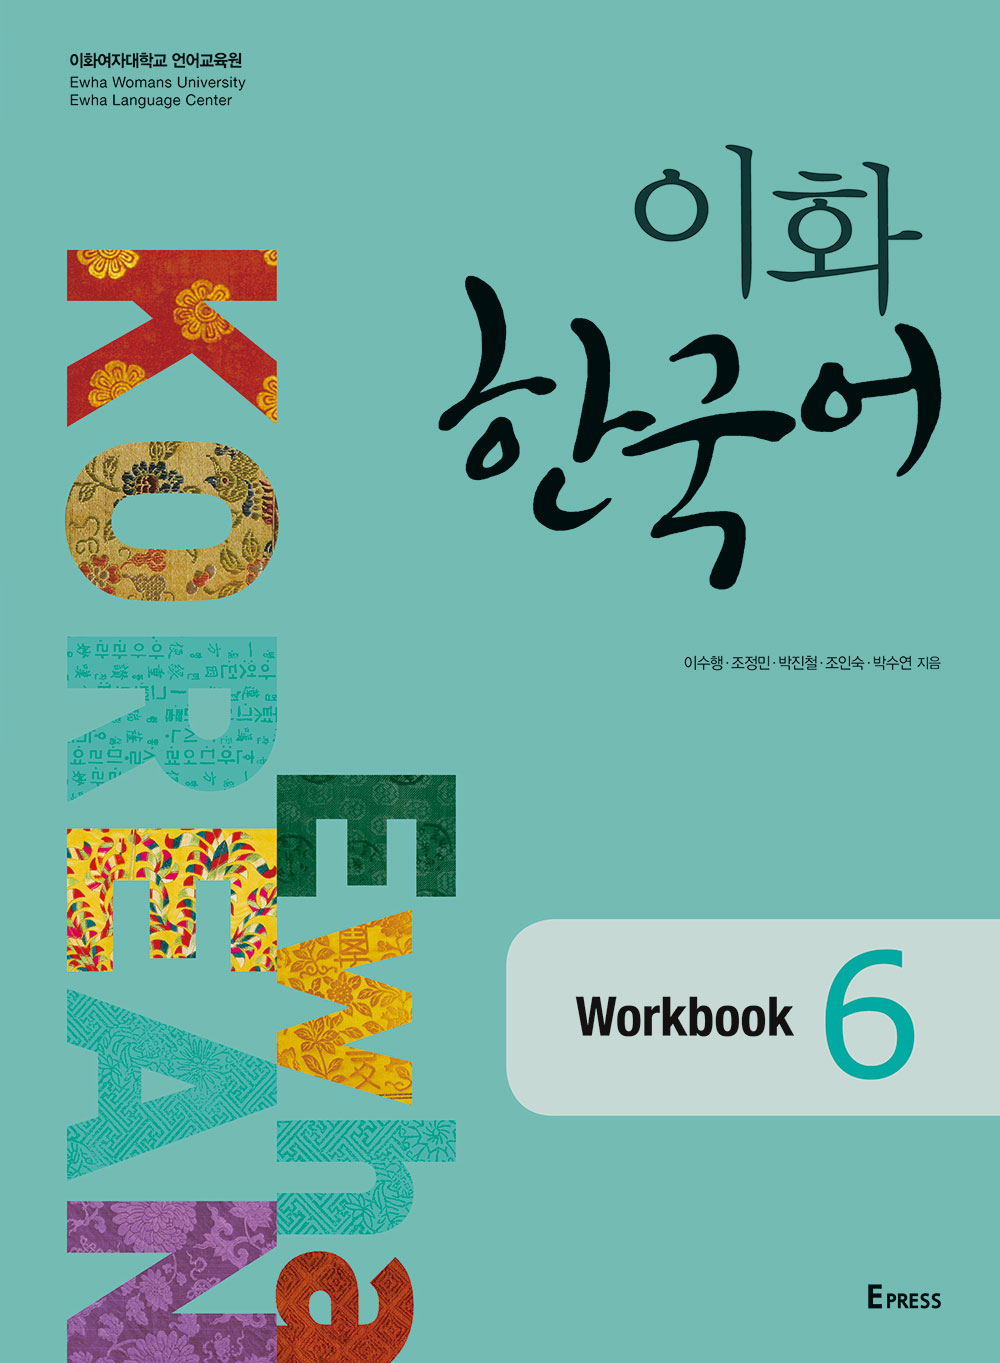  [EBOOK] Ewha Korean Workbook 6 도서이미지